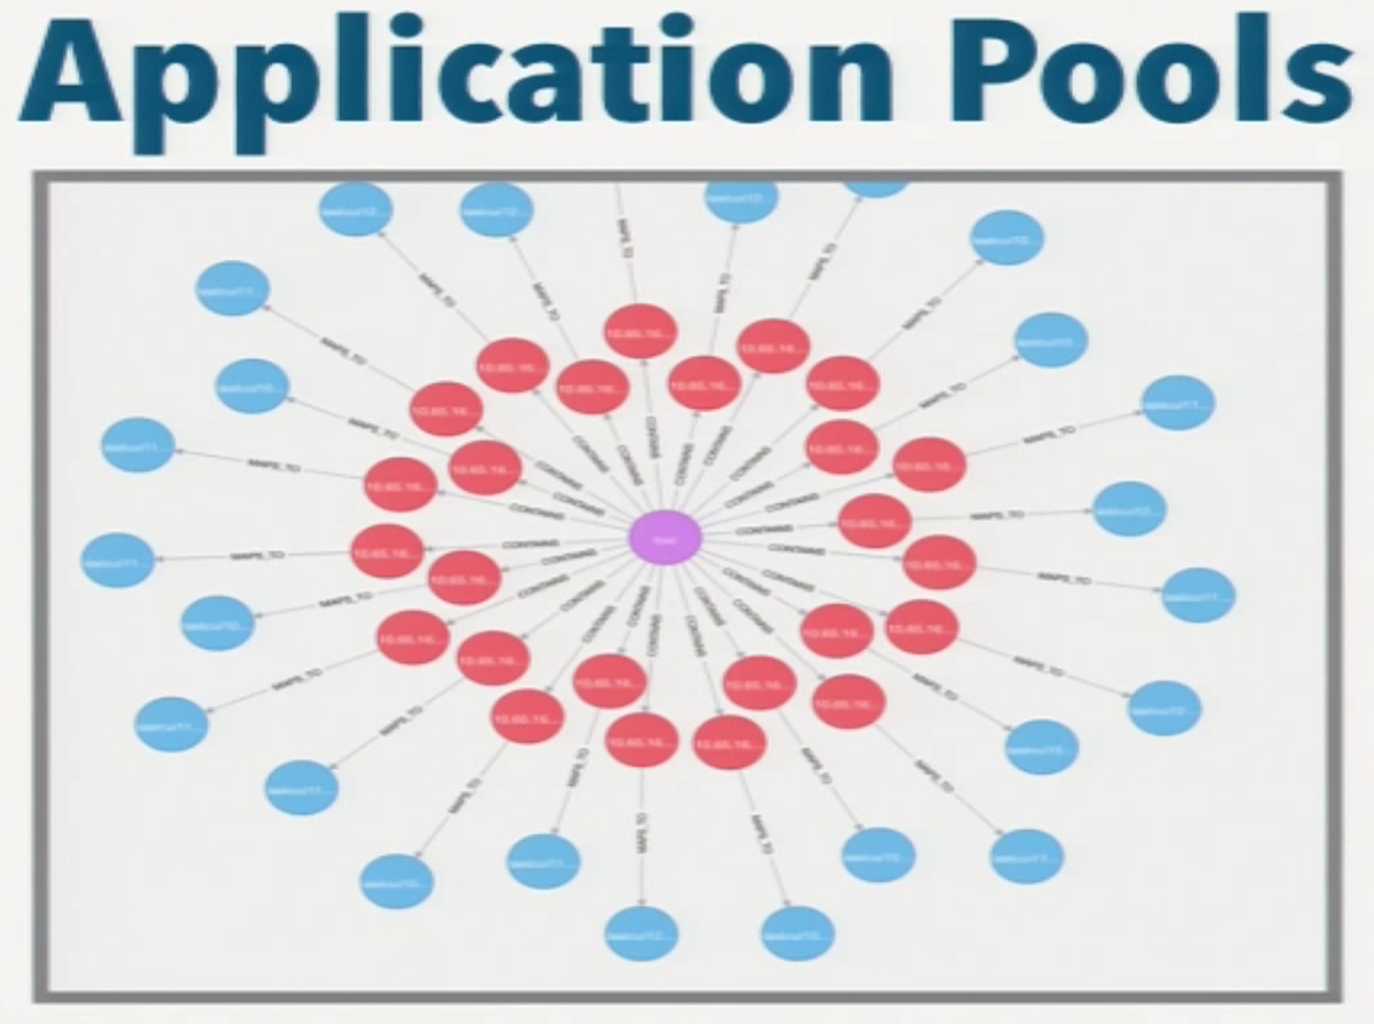 a neo4j data model of application pools